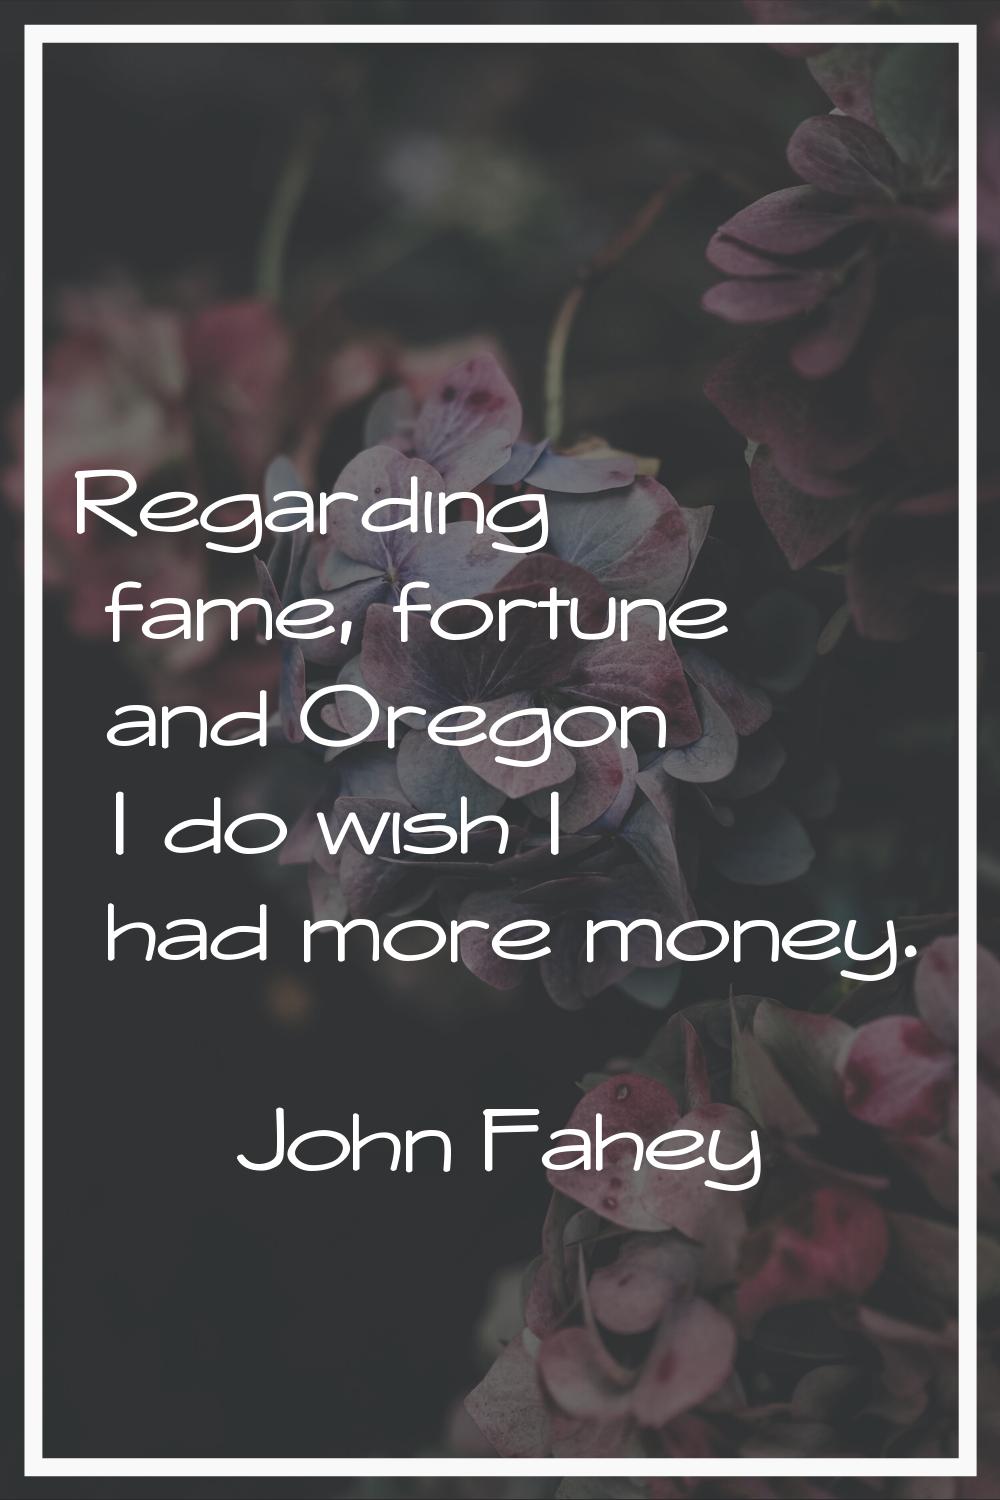 Regarding fame, fortune and Oregon I do wish I had more money.